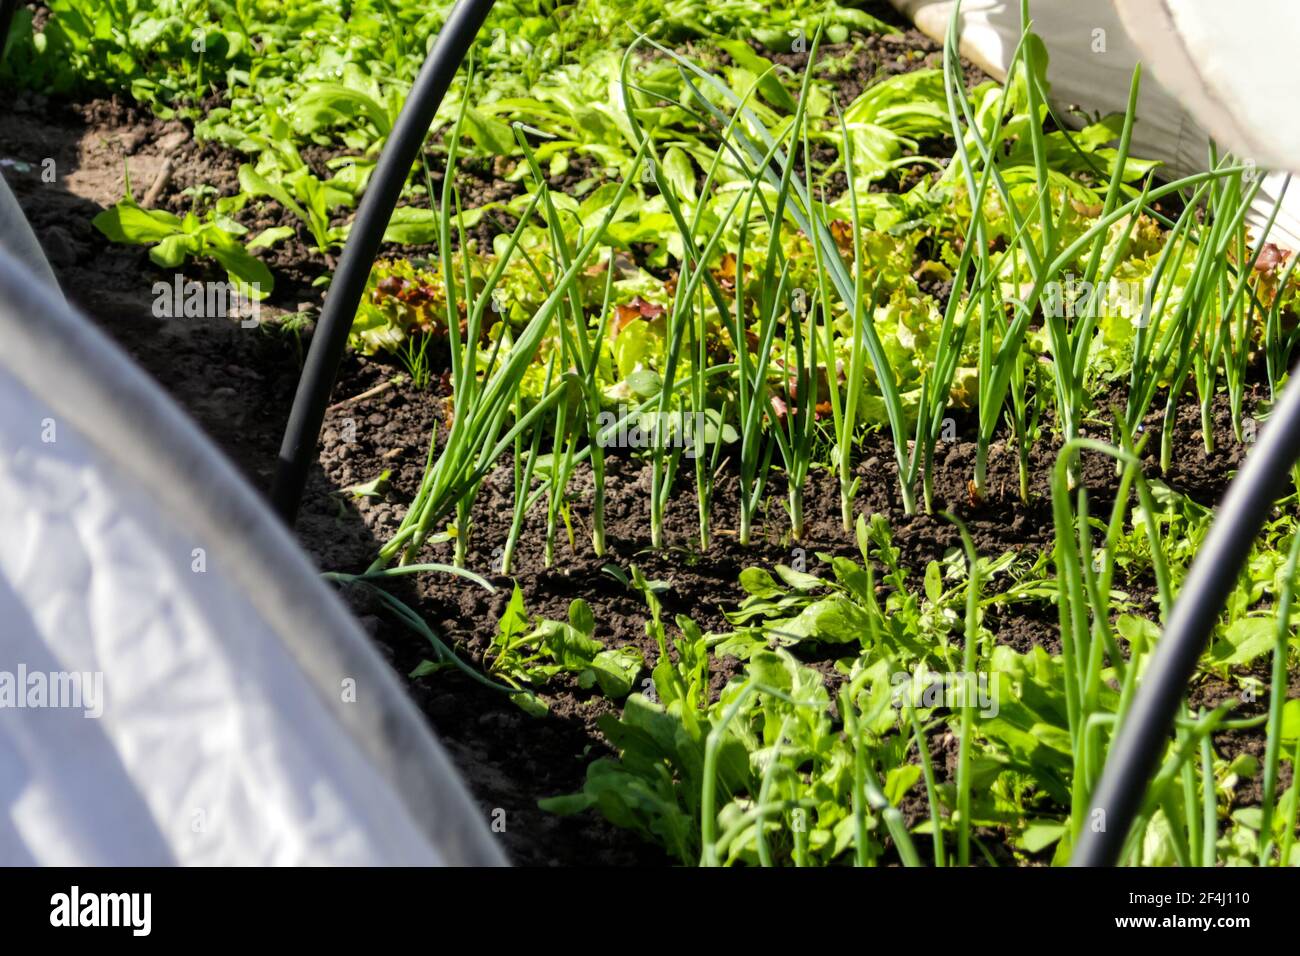 Defocus vegetable garden. Onion, leek, aragula, spinach, salad, lettuce. Greens, greenery in arch solar house. Organic farming, seedlings growing in Stock Photo